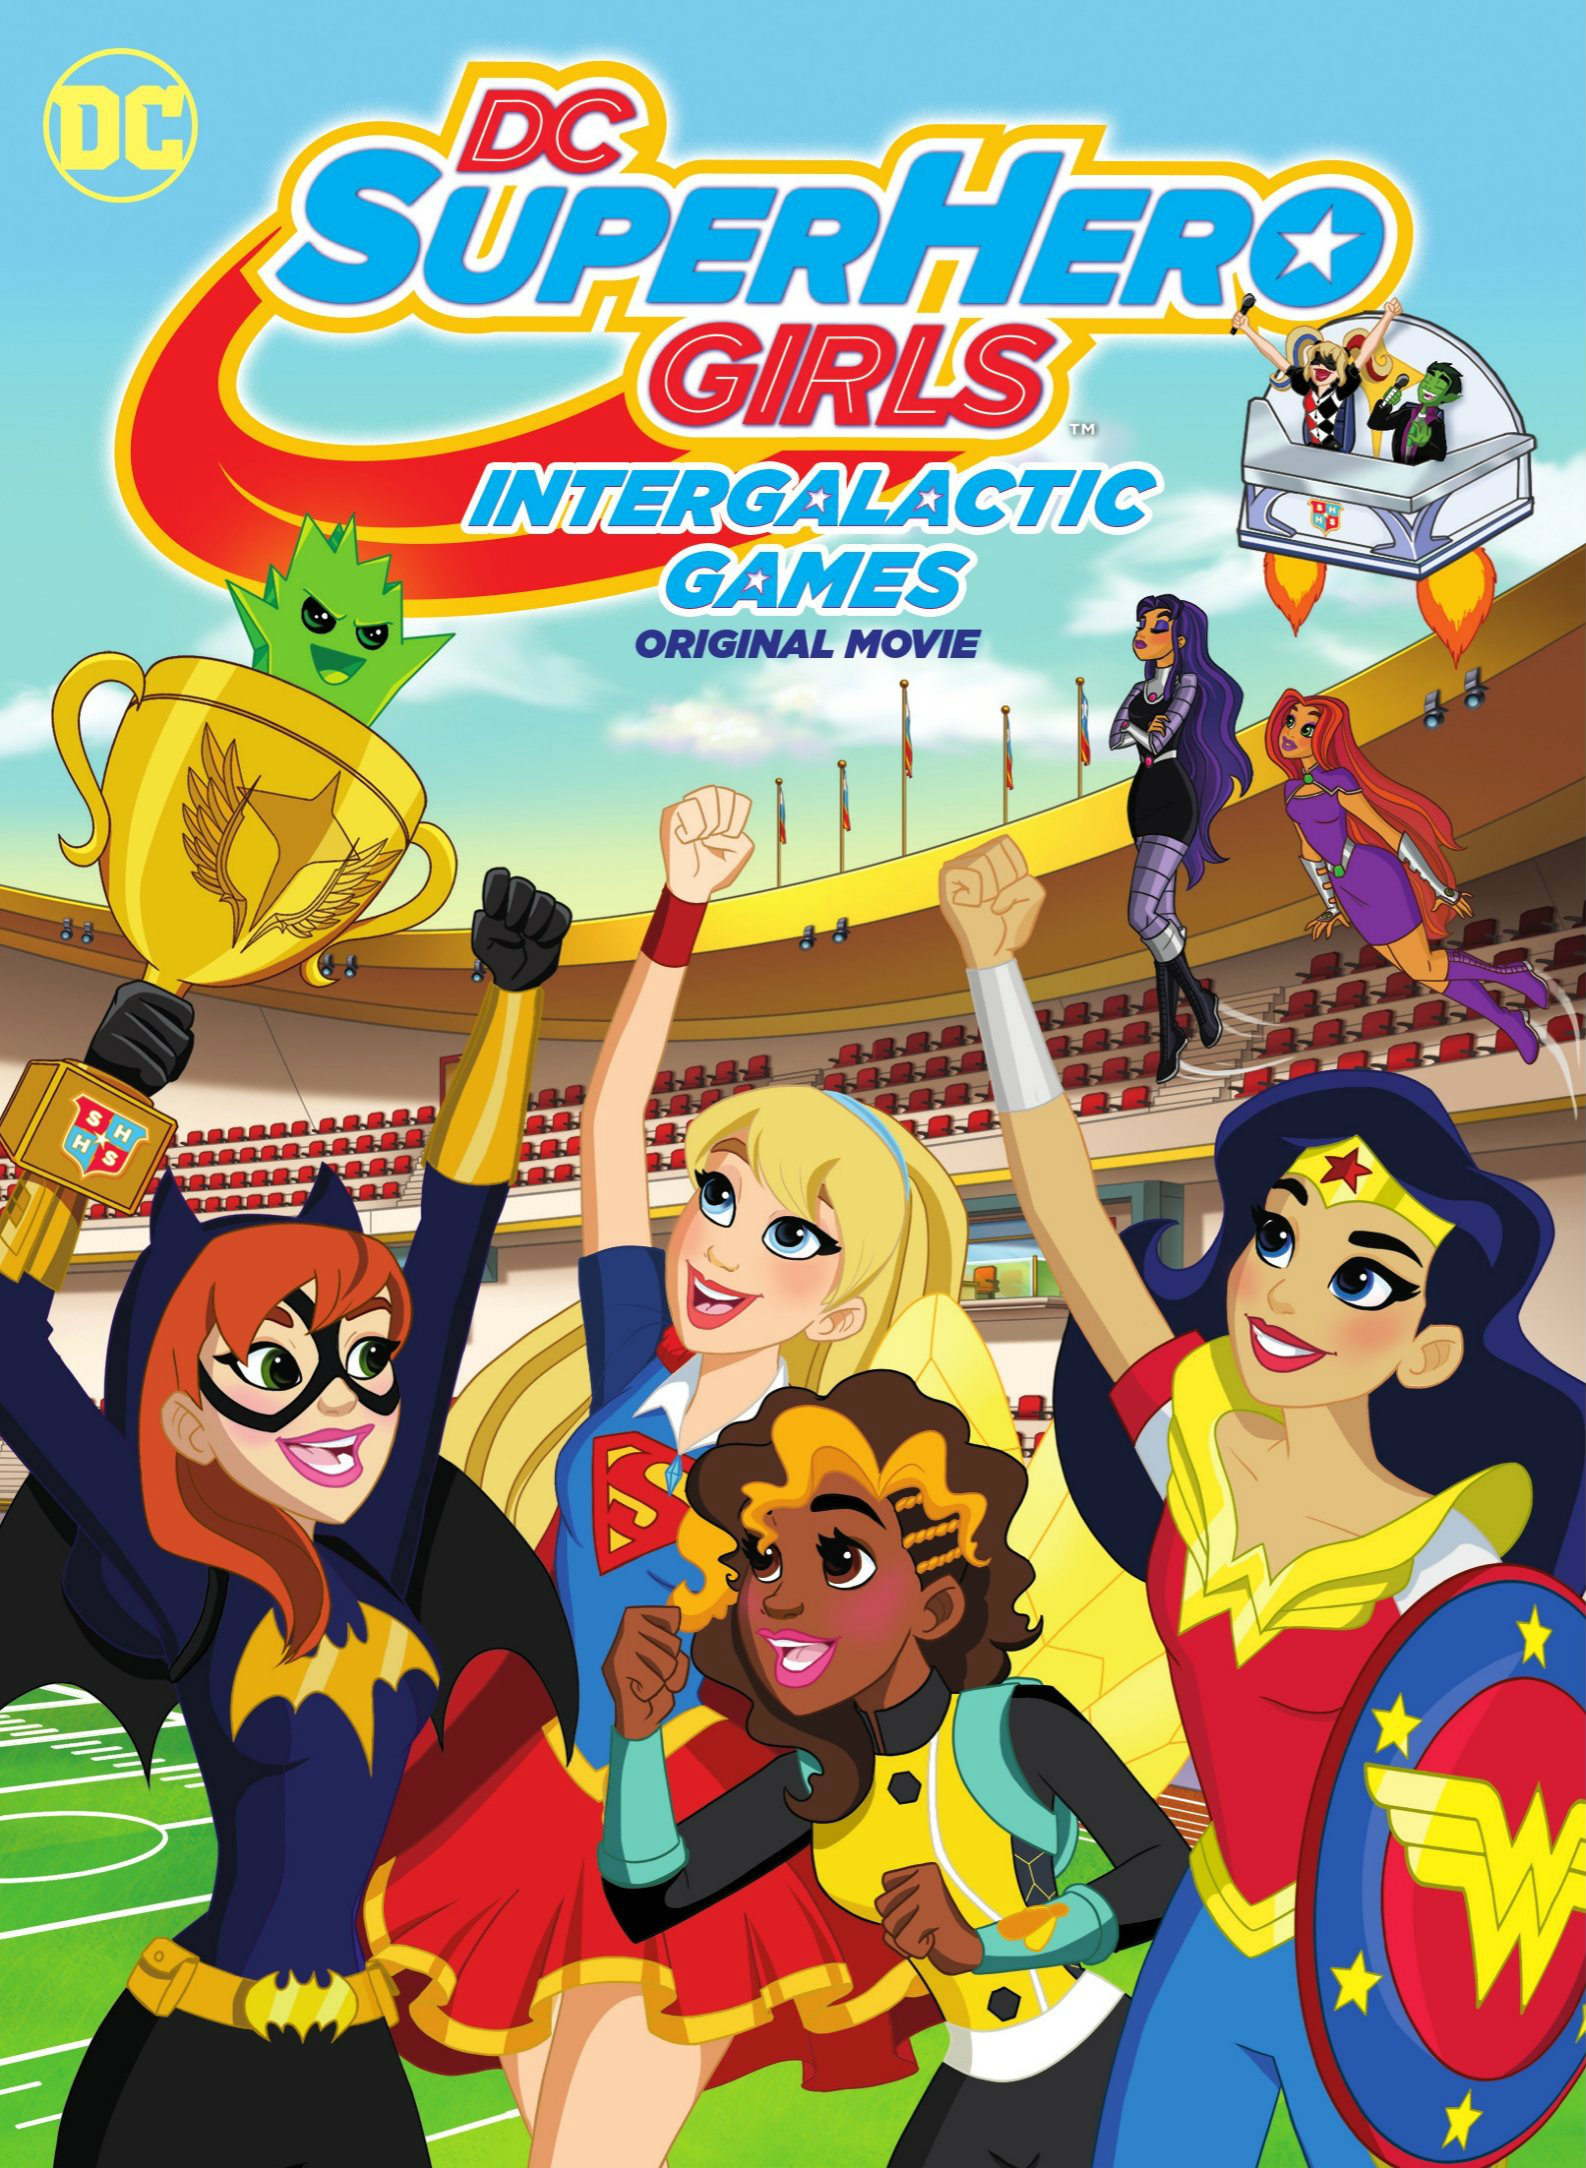 Super hero high. Супергерои девочки. Девчонки Супергерои межгалактические игры. 3 Девочки Супергерои.